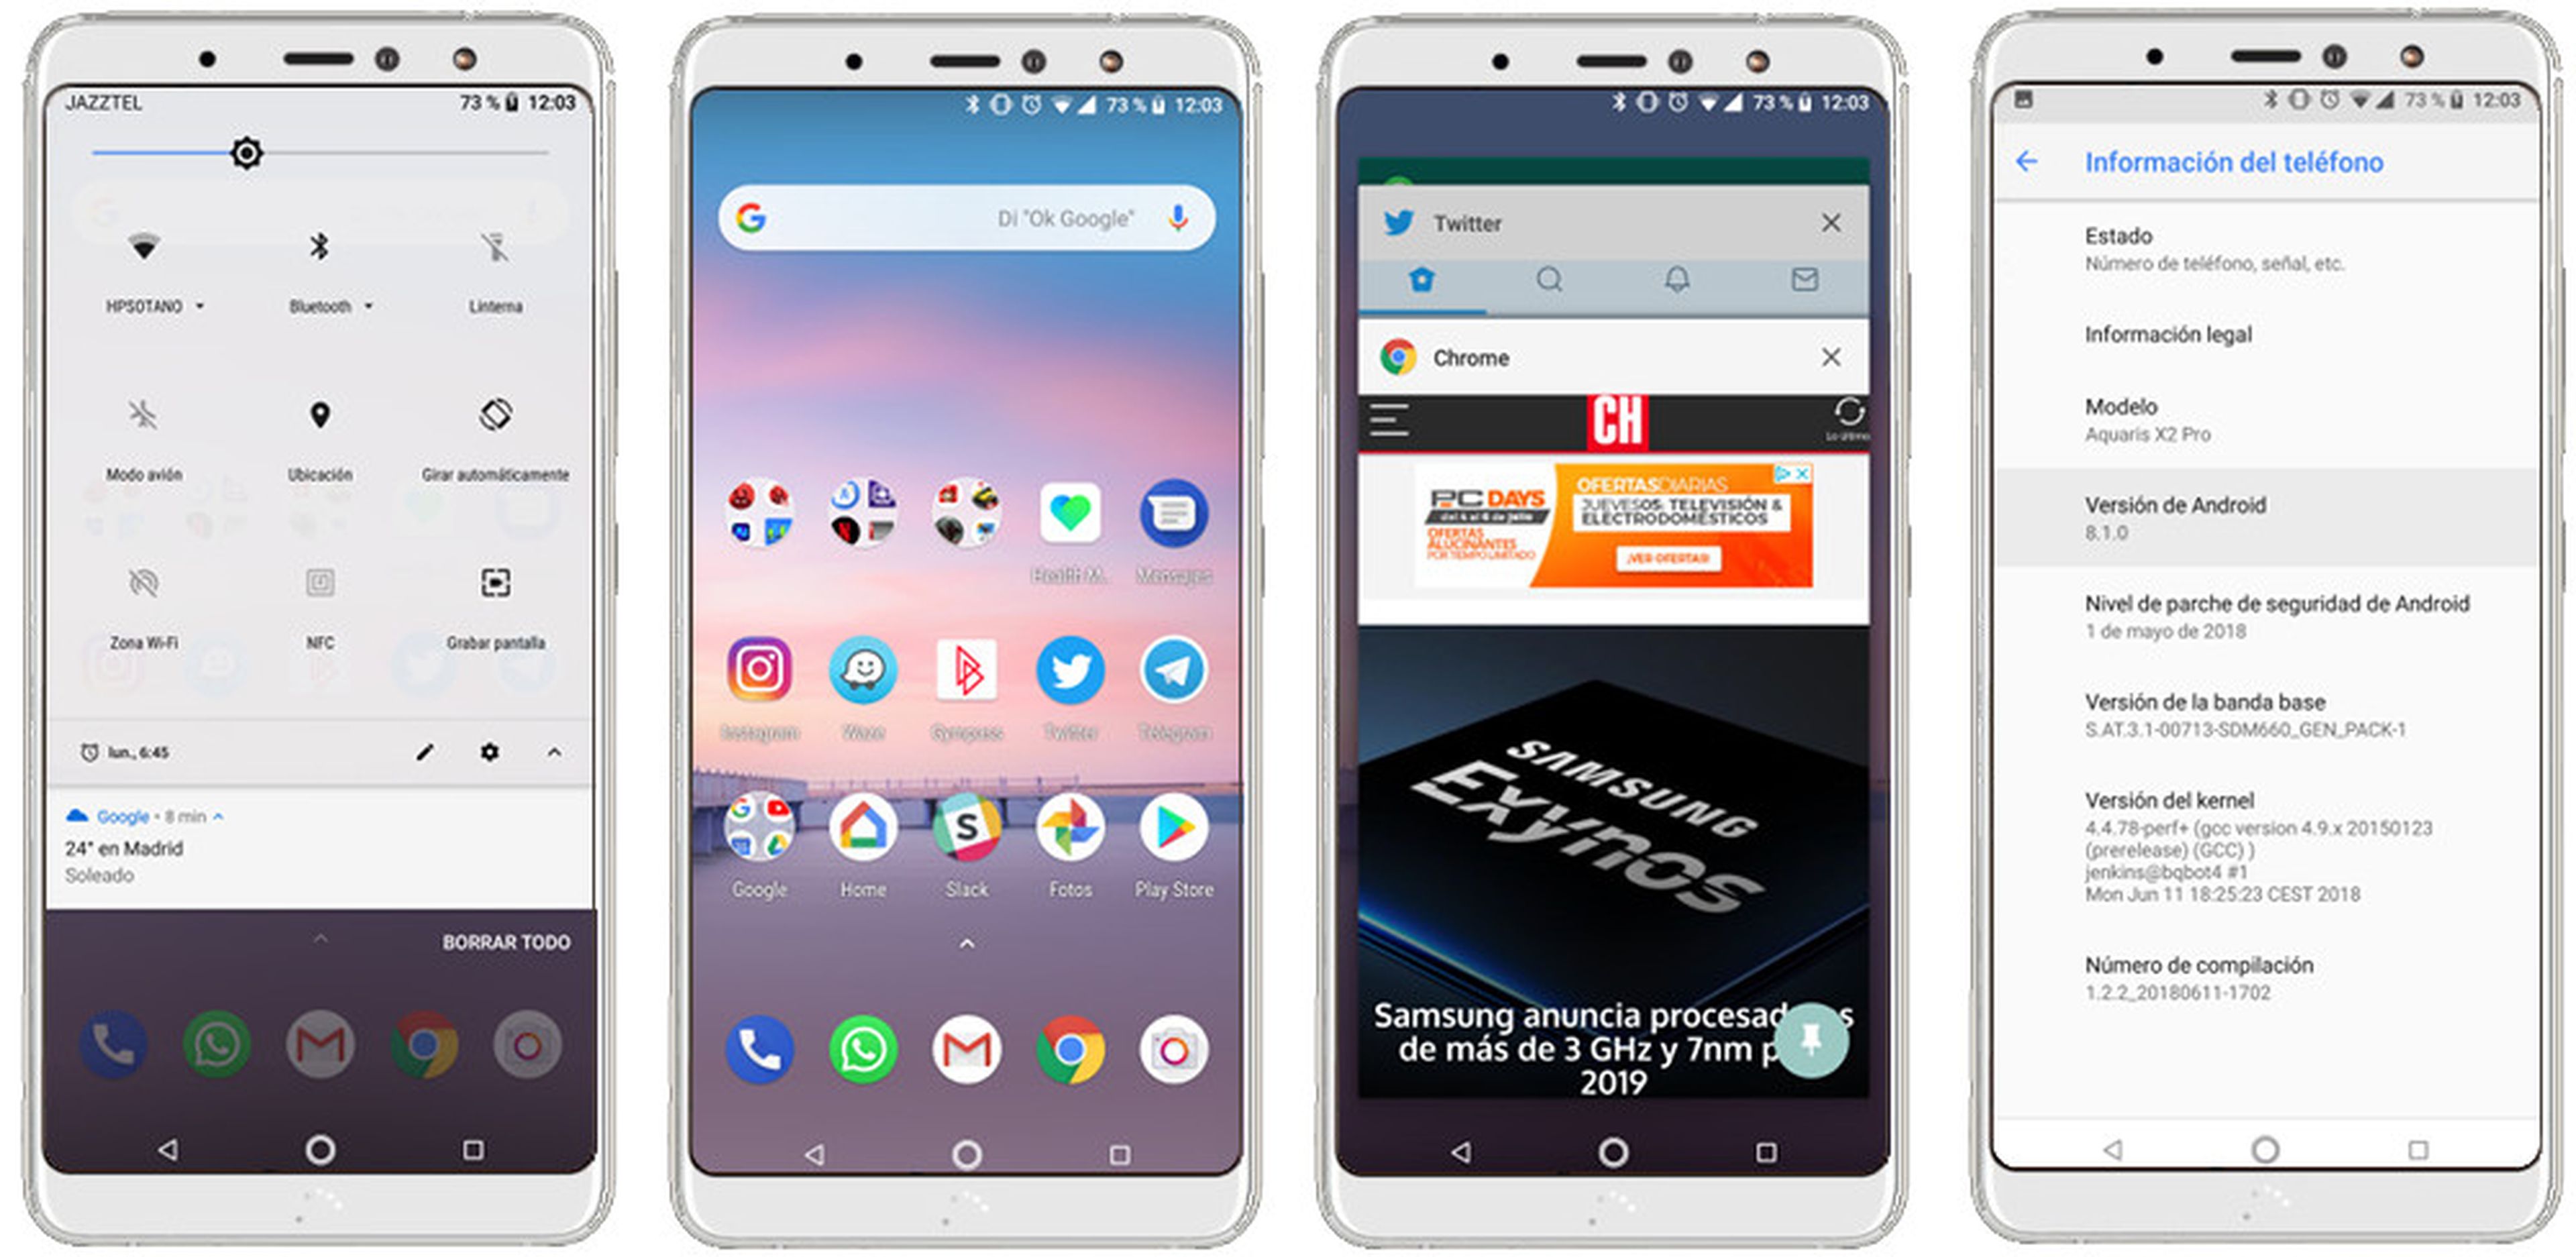 Android One - Aquaris X2 Pro